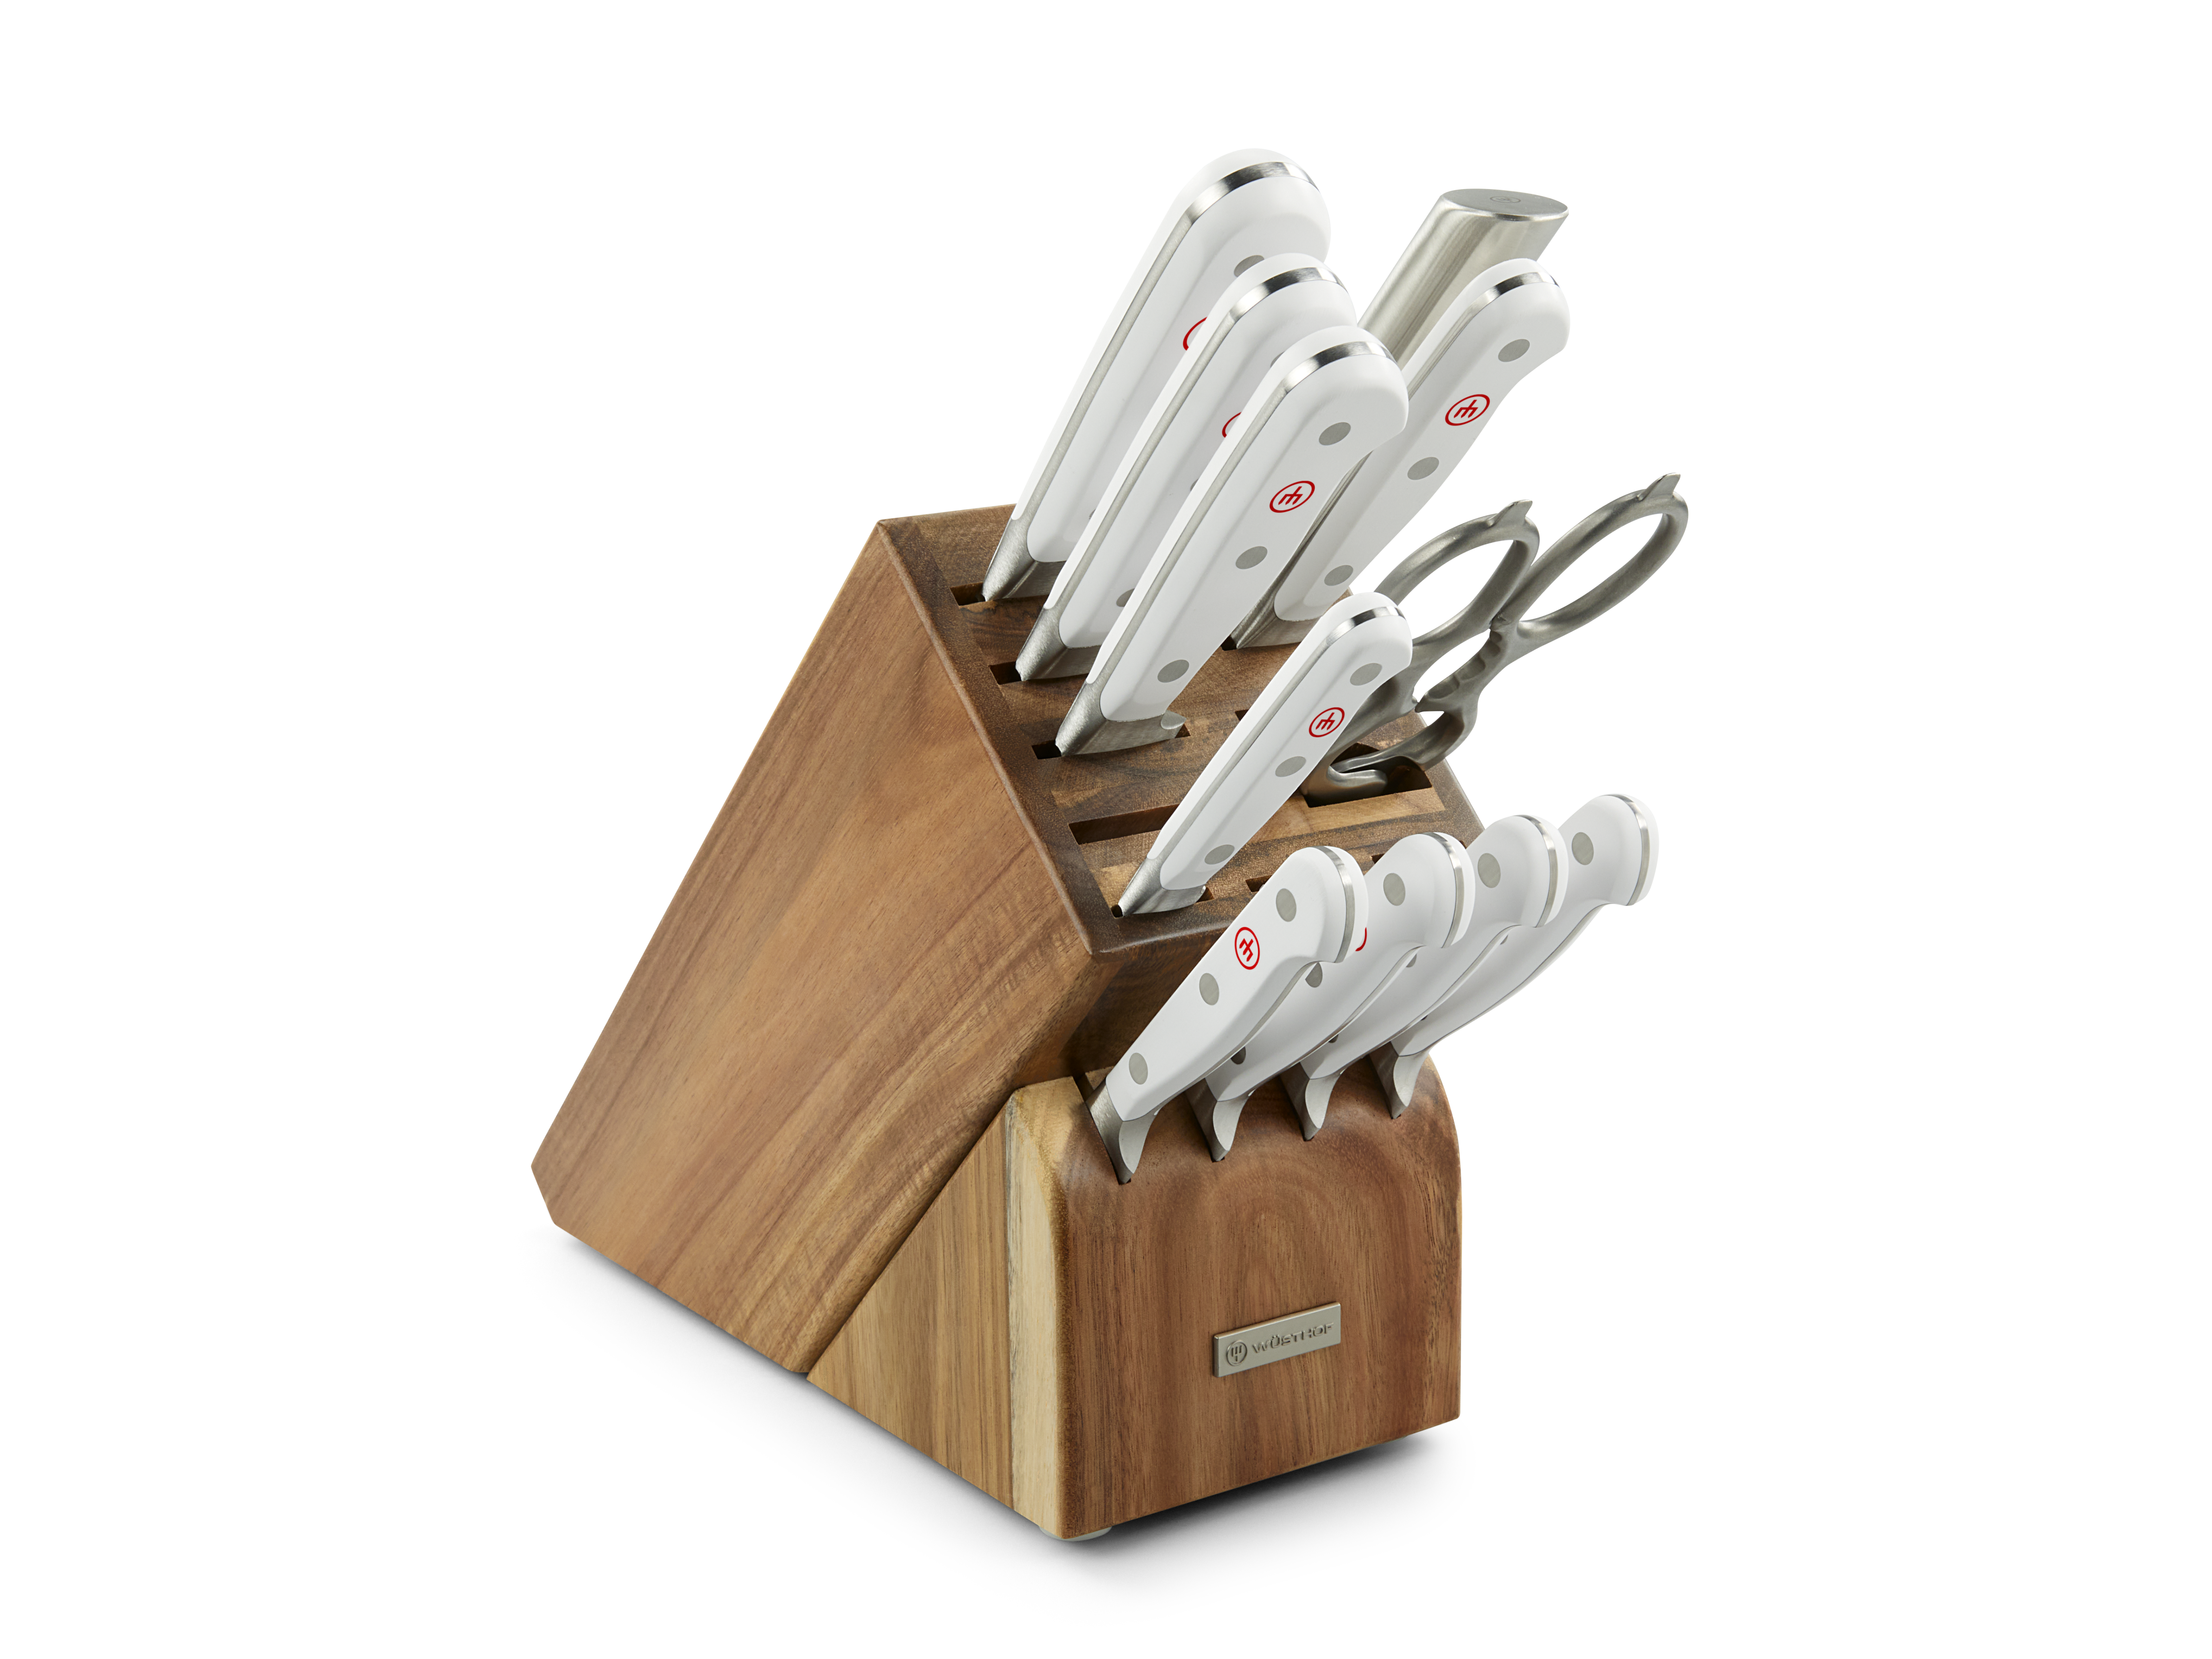 Wüsthof Classic 12-piece knife set, 1090171201